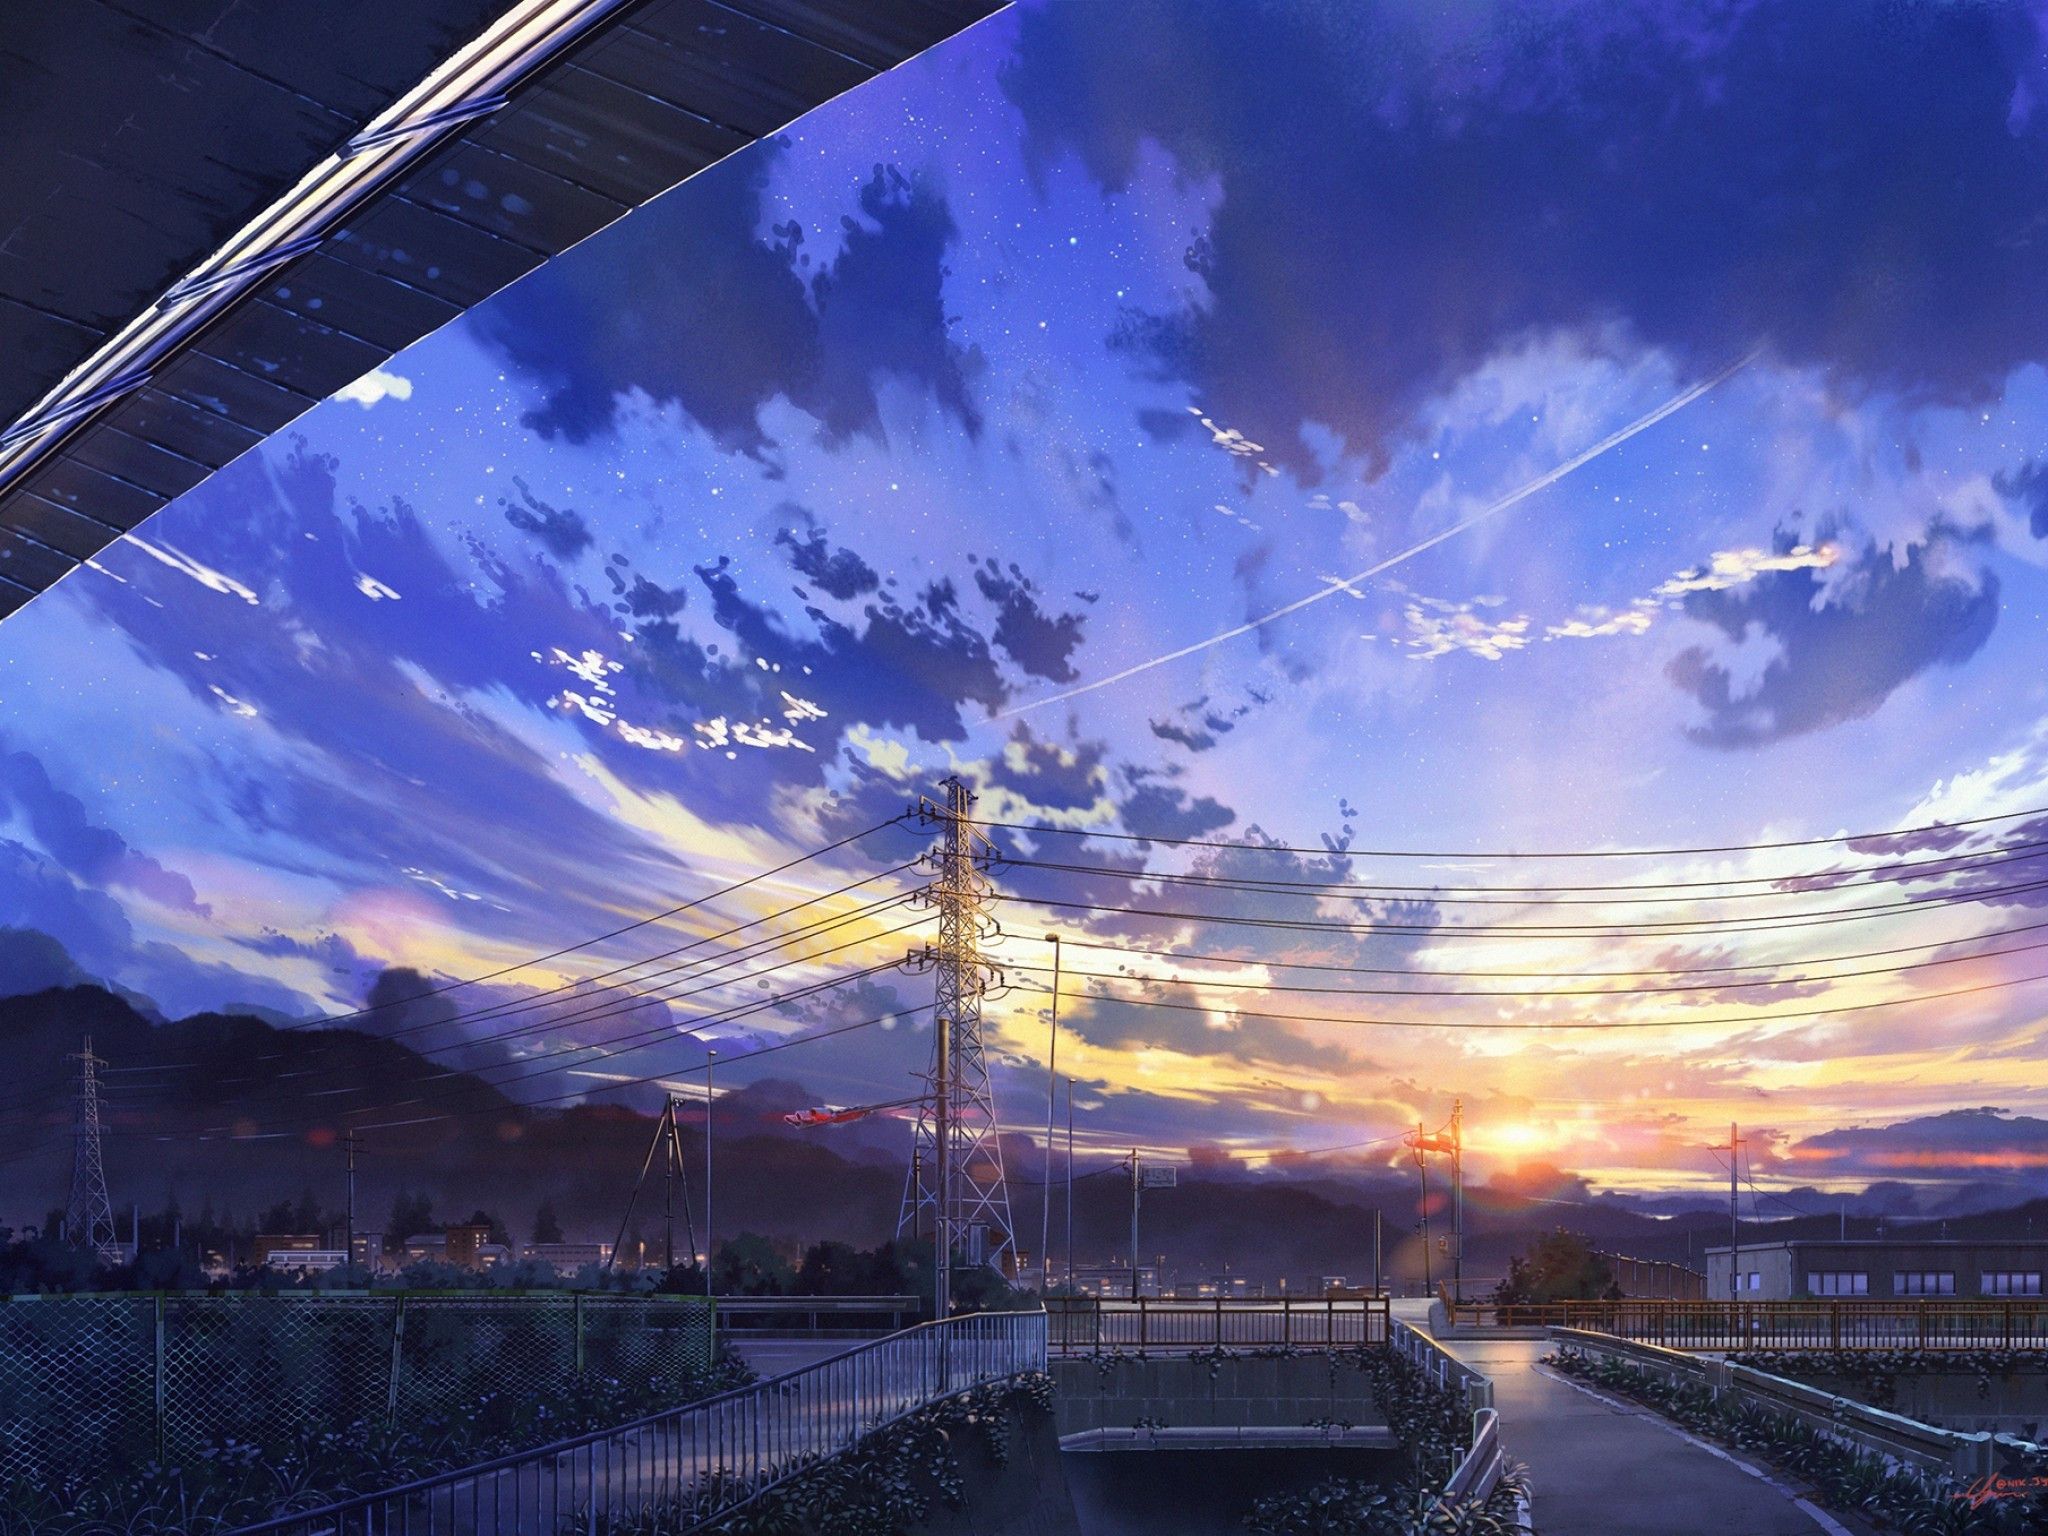 Anime Landscape Wallpapers - 4k, HD Anime Landscape Backgrounds on